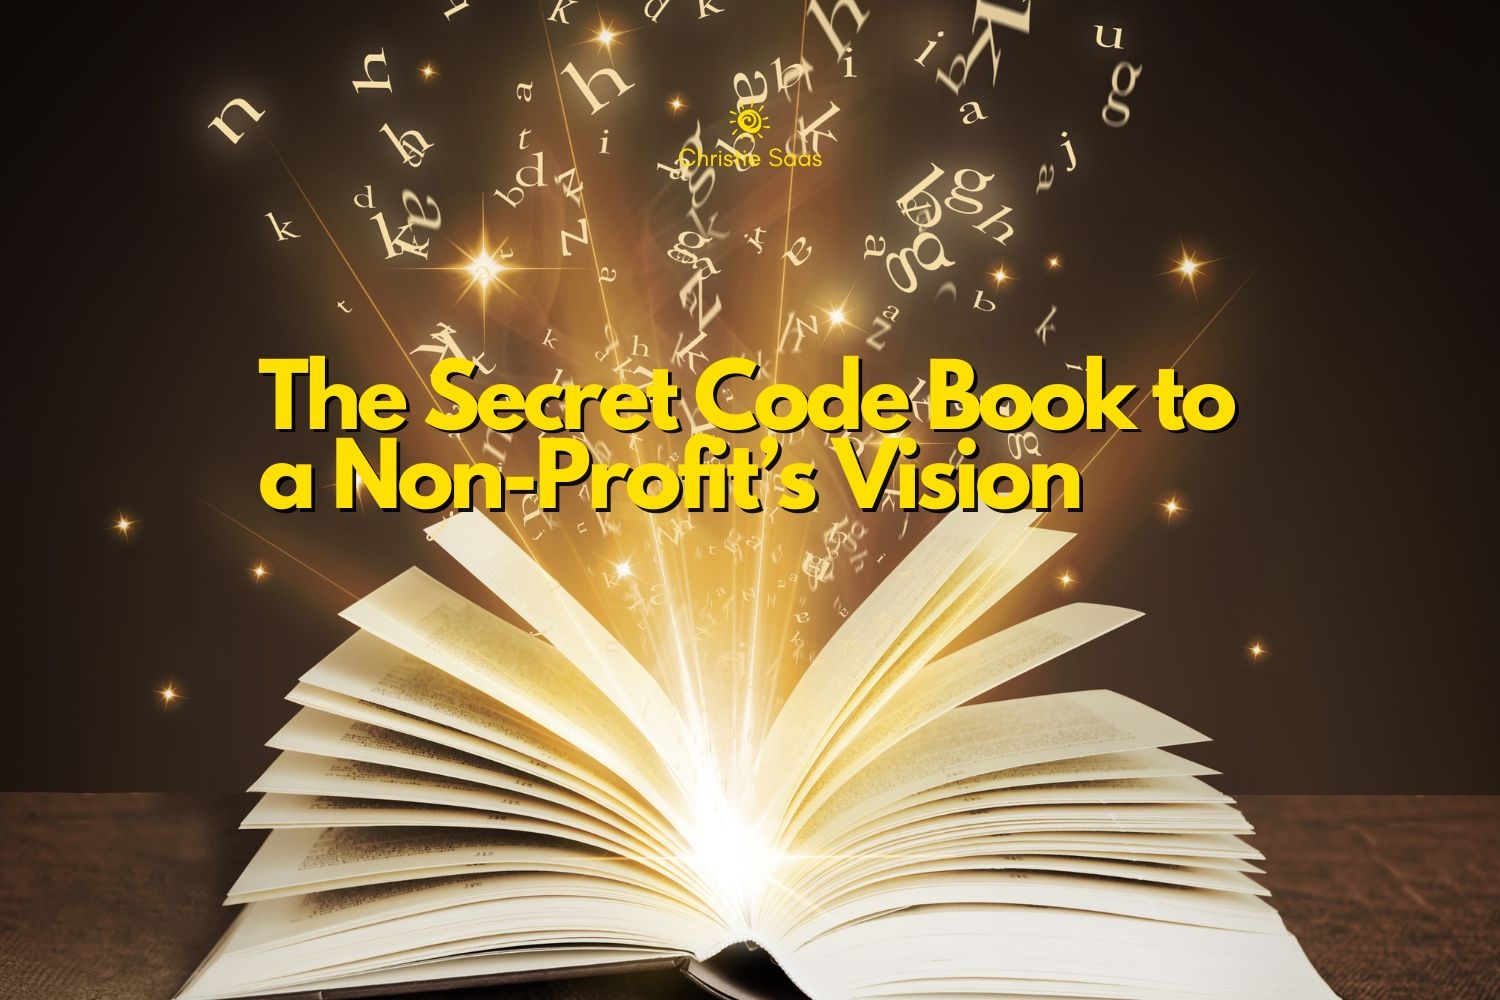 The Secret Code Book to a Non-Profit’s Vision